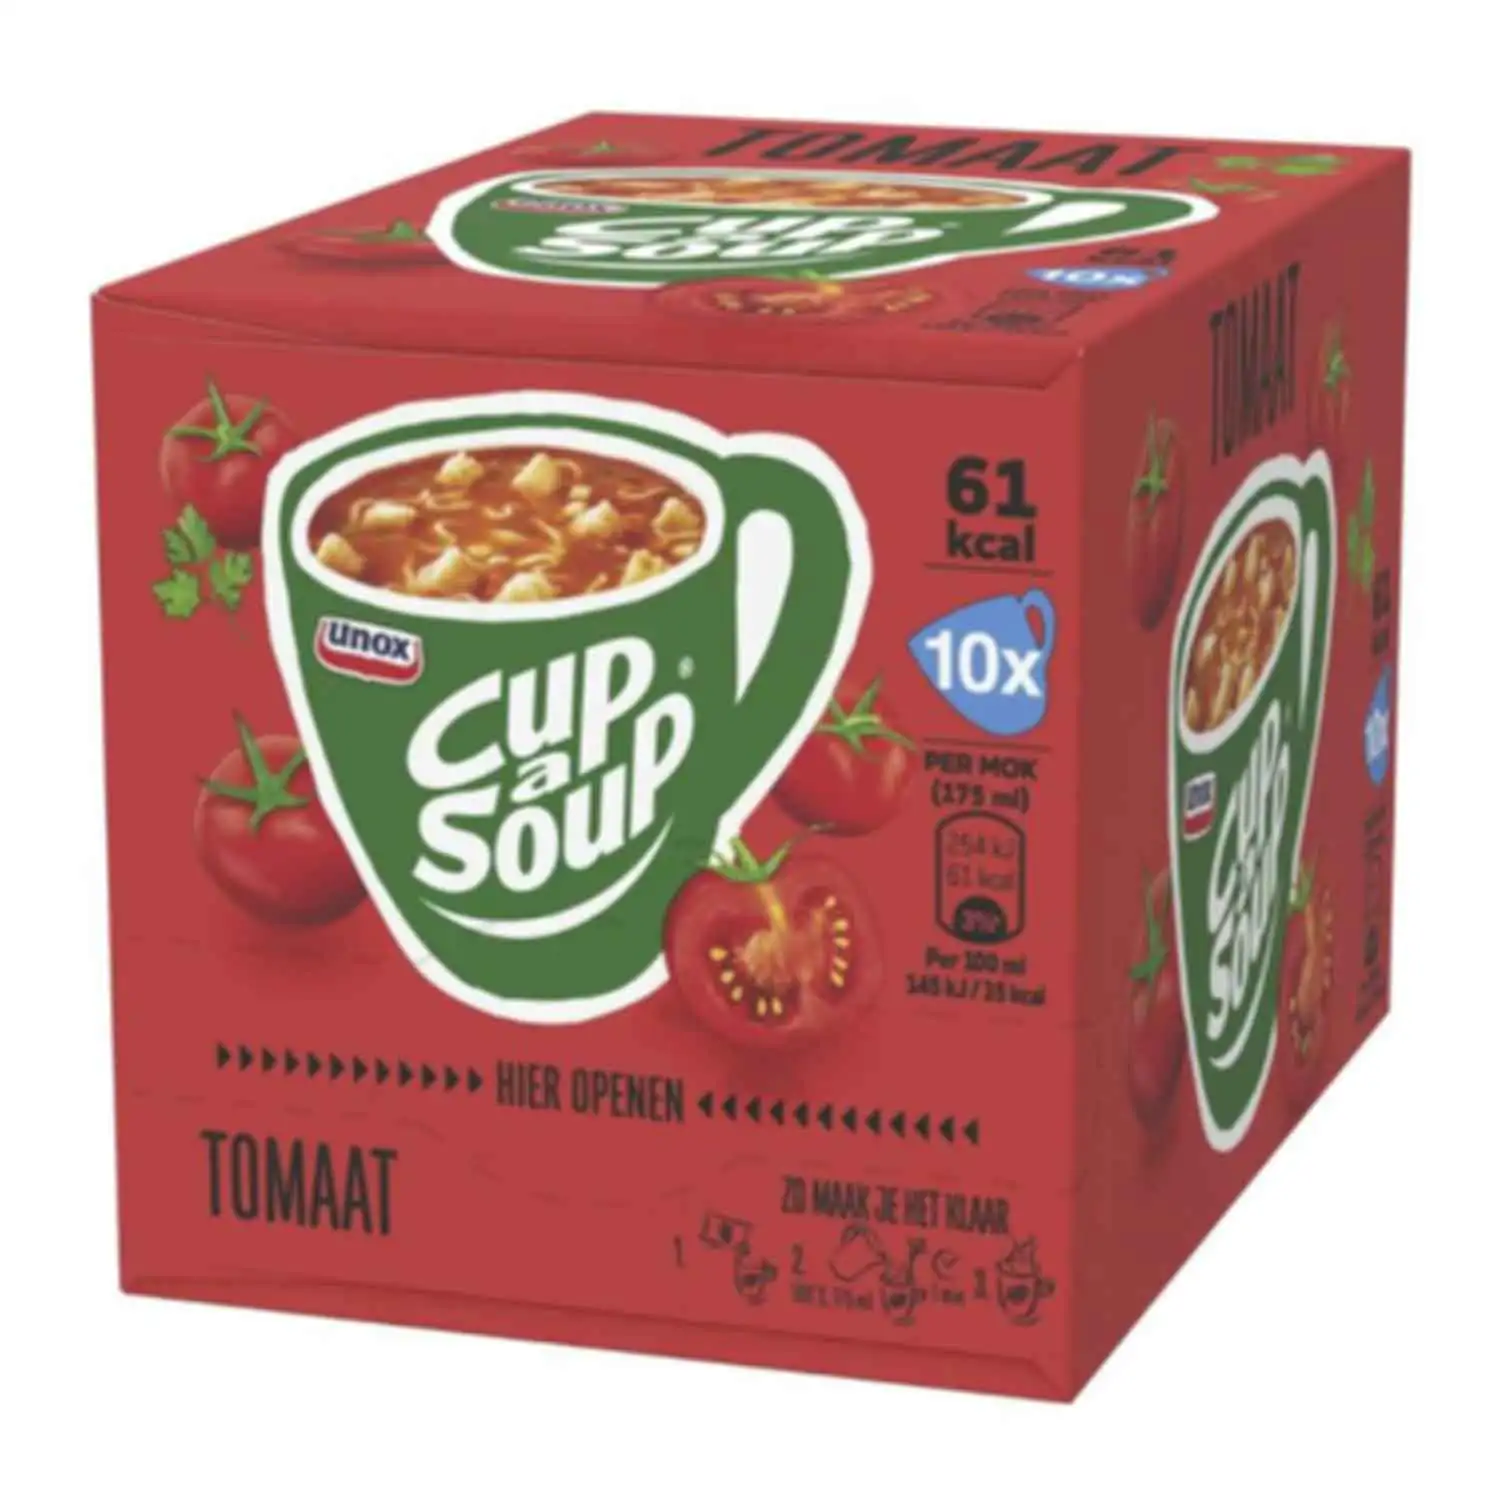 10x Cup a Soup tomato 18g